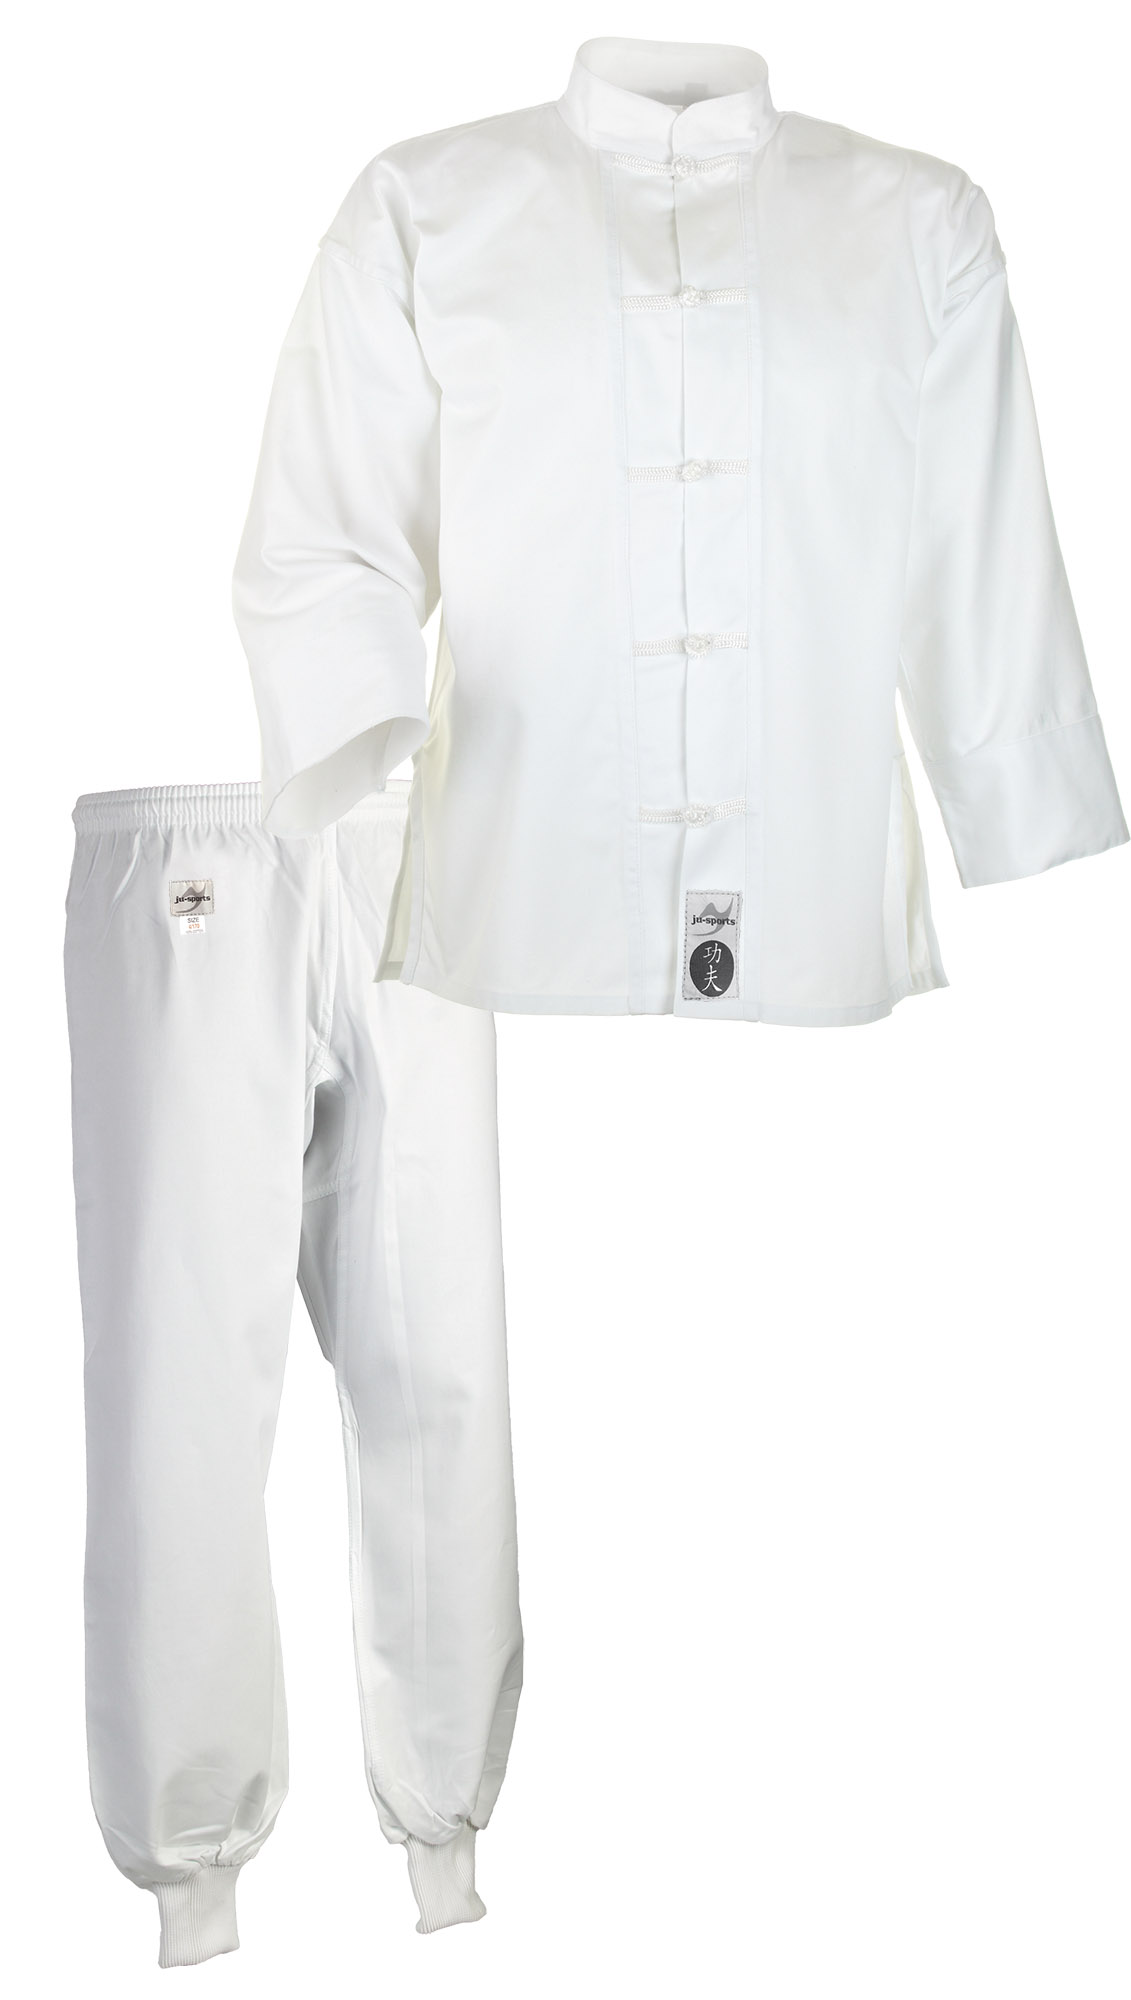 Kung Fu uniform white